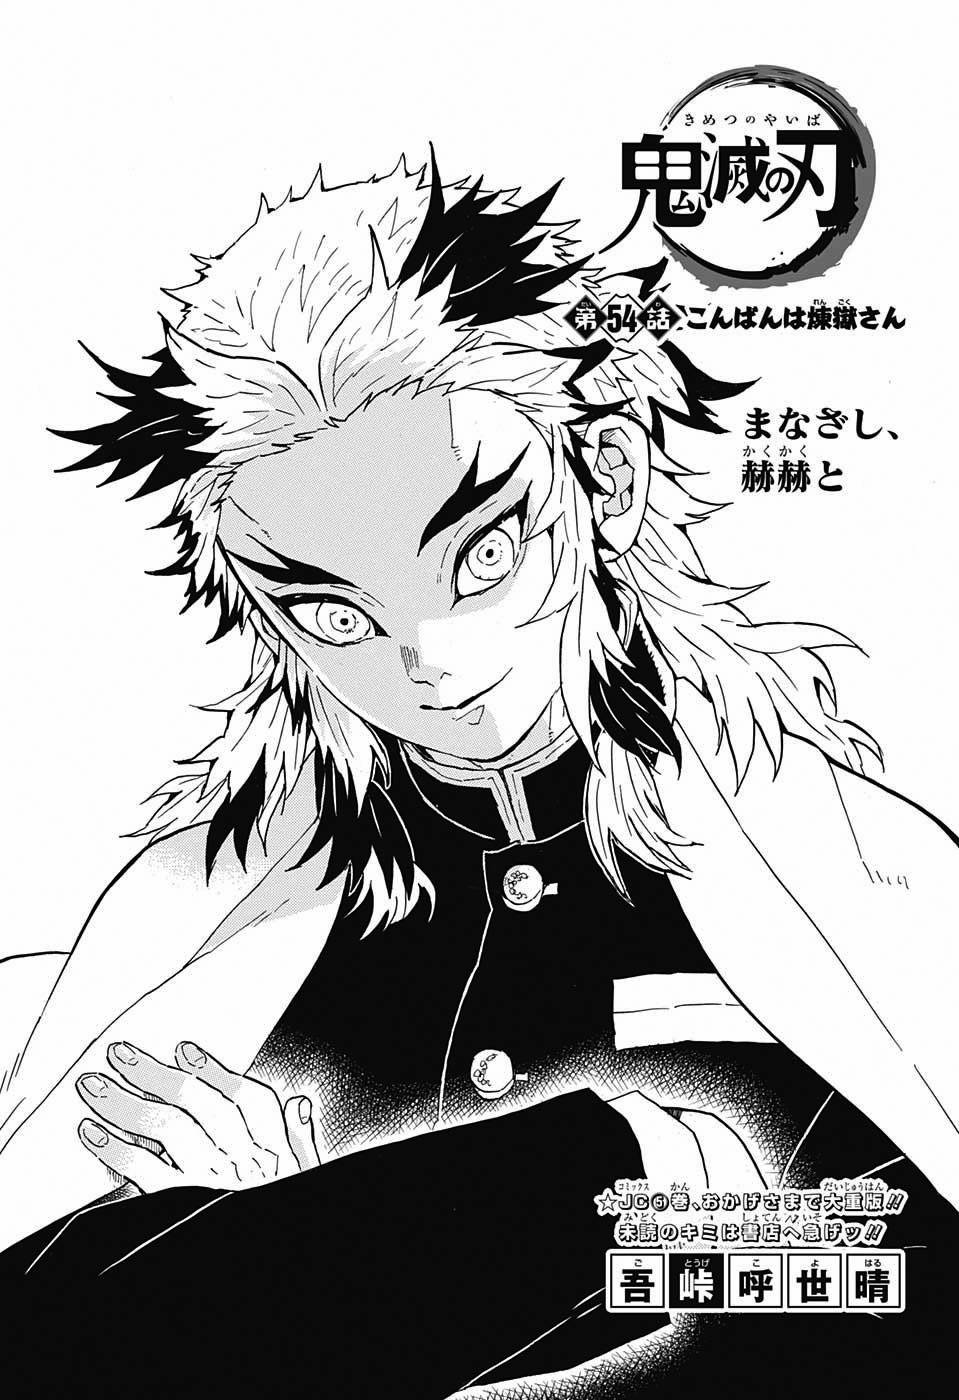 Rengoku Manga Cover In Black And White wallpaper.